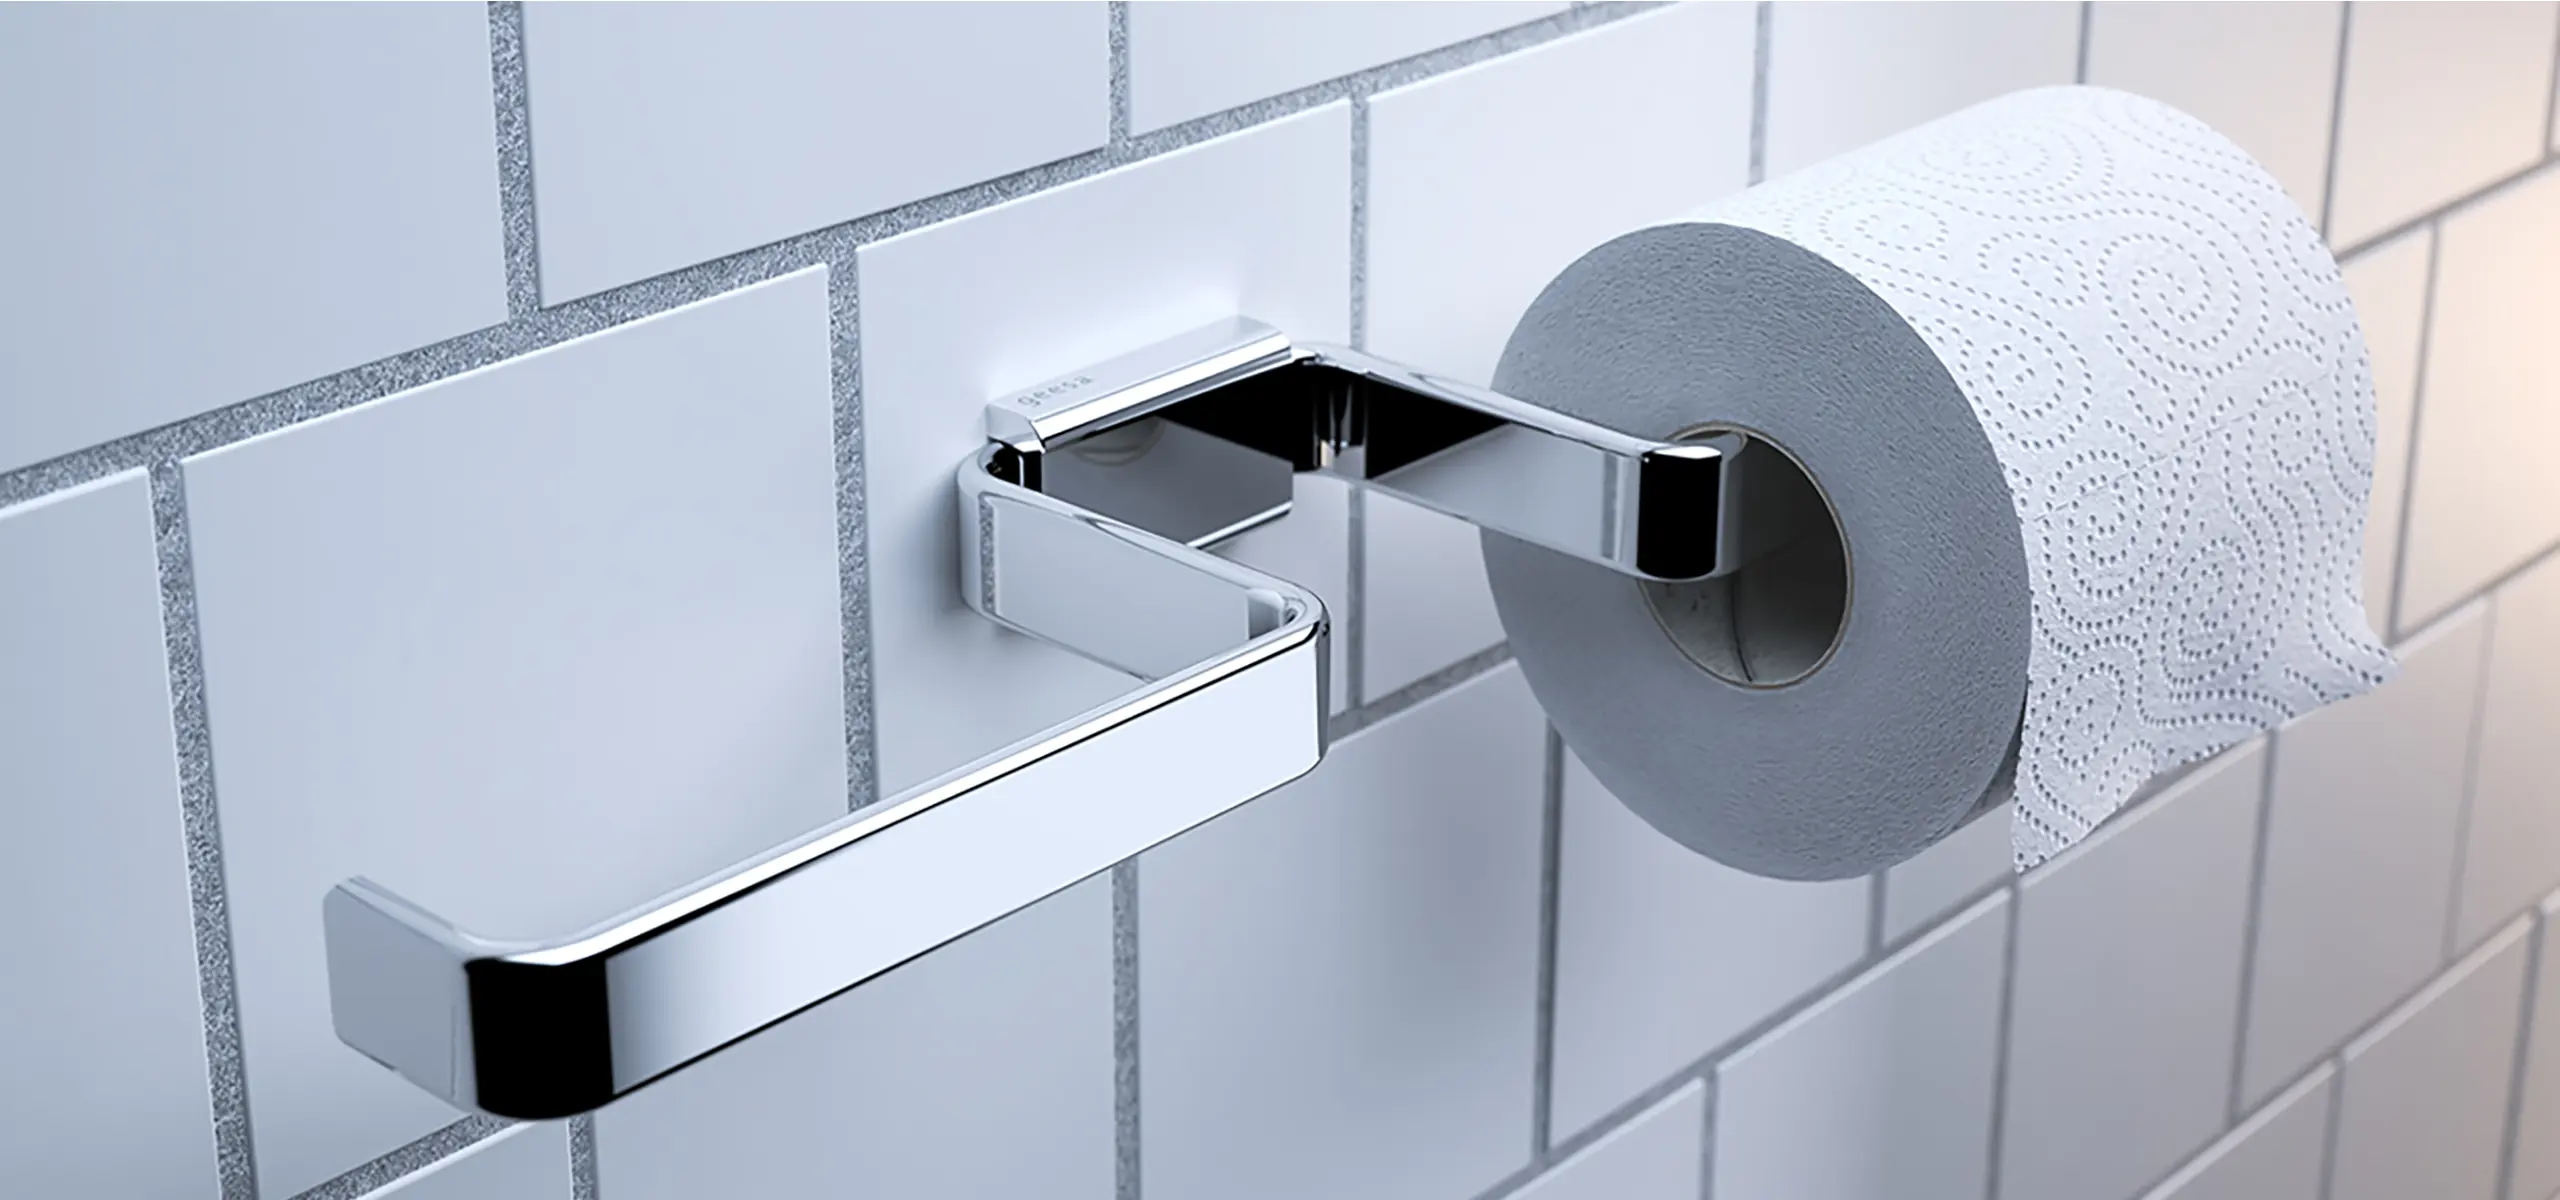 Geesa-storage-system-AIM-bathroom-accessories-double-toilet roll-holder